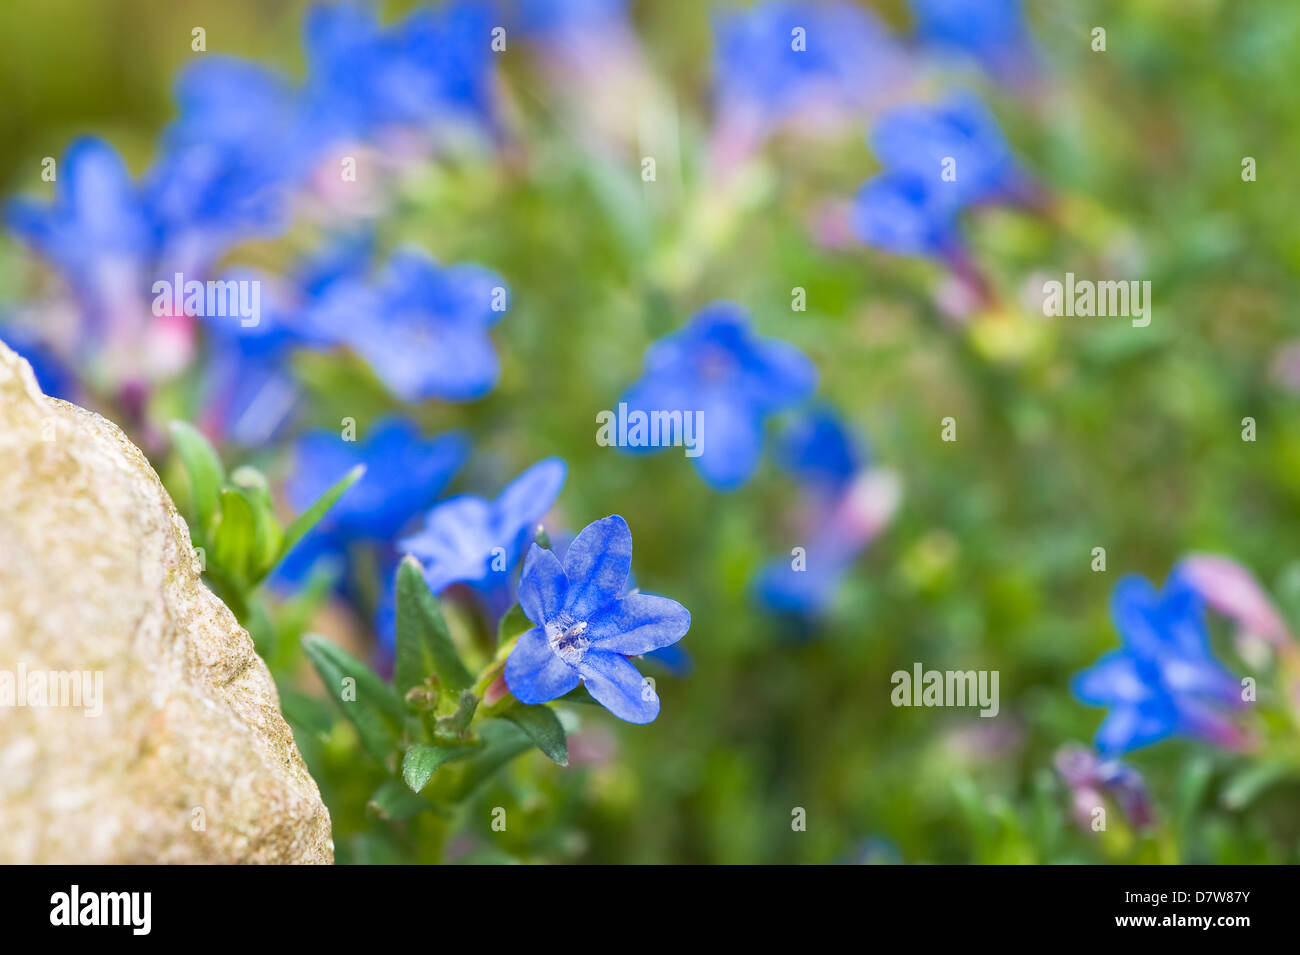 Lithodora diffusa 'Heavenly Blue' Stock Photo